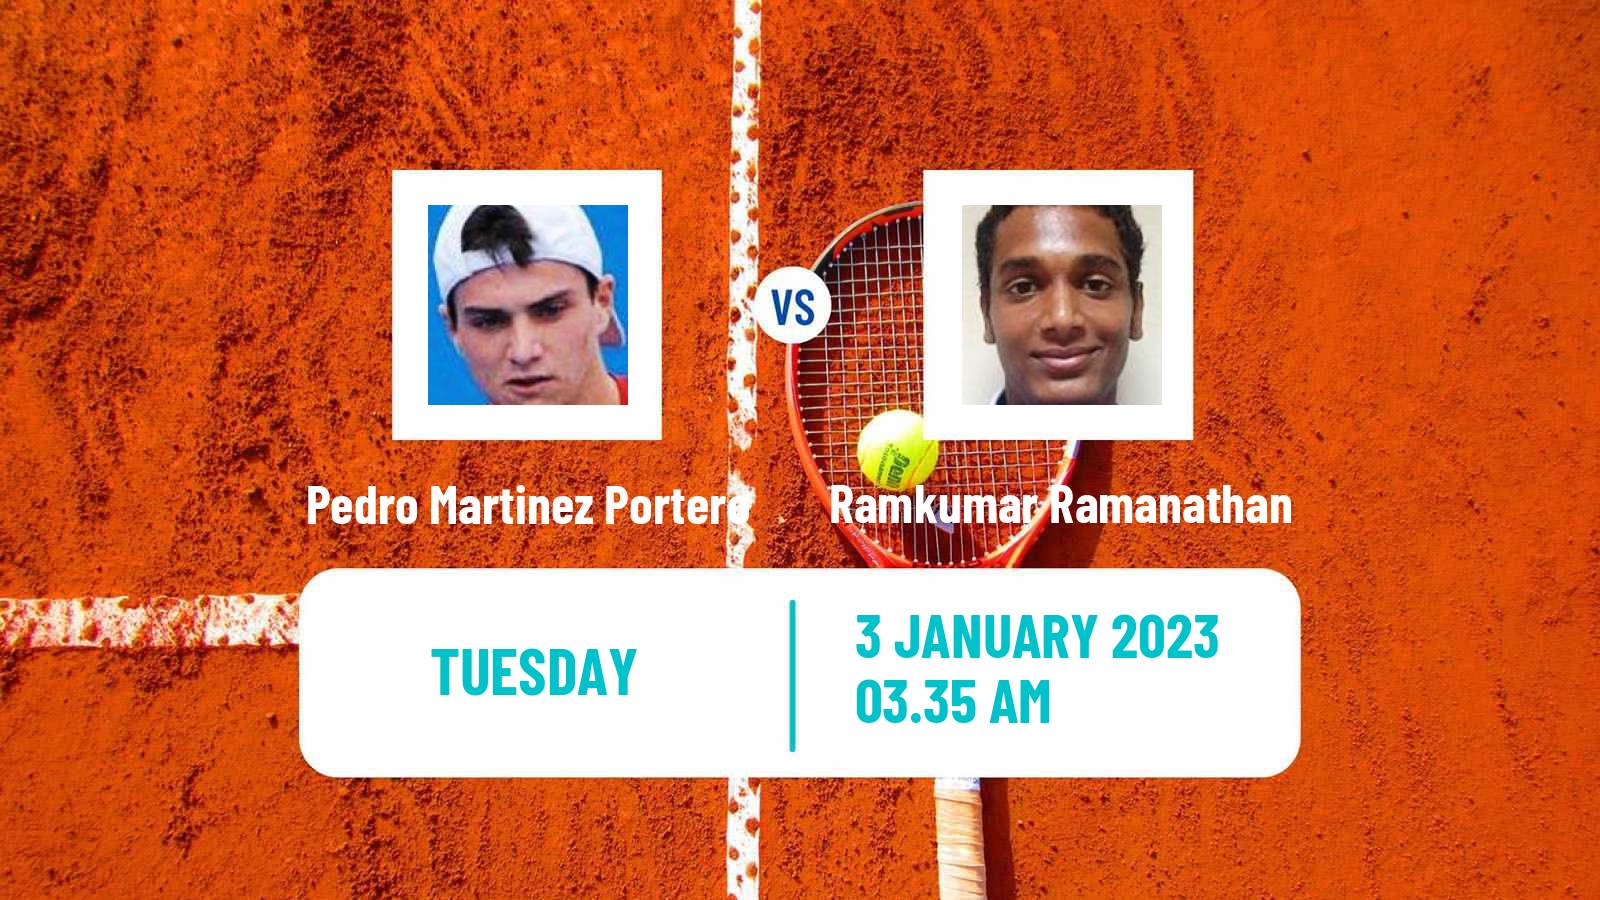 Tennis ATP Pune Pedro Martinez Portero - Ramkumar Ramanathan